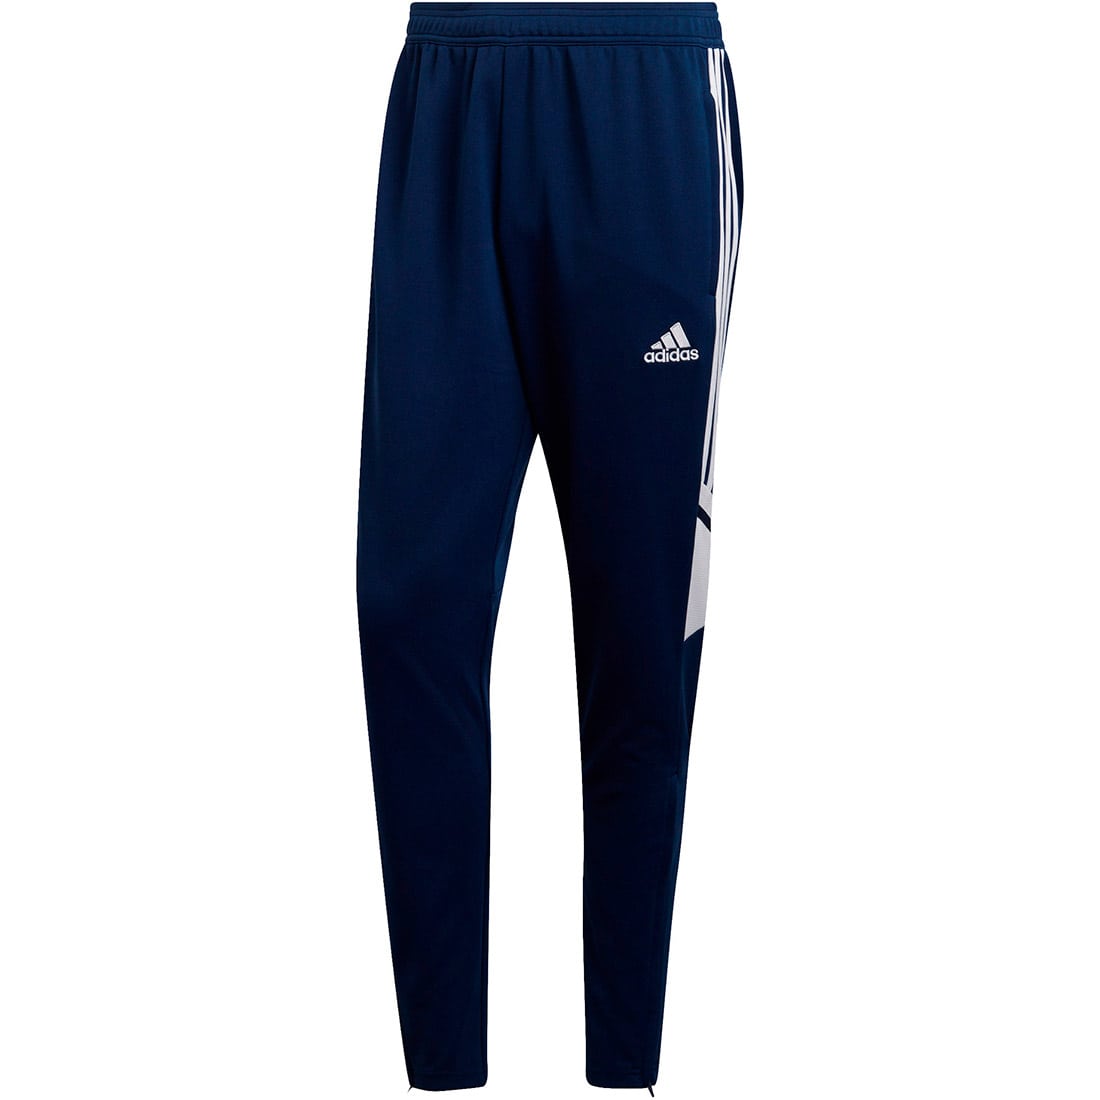 Adidas Herren Trainingshose Condivo 22 blau-weiß